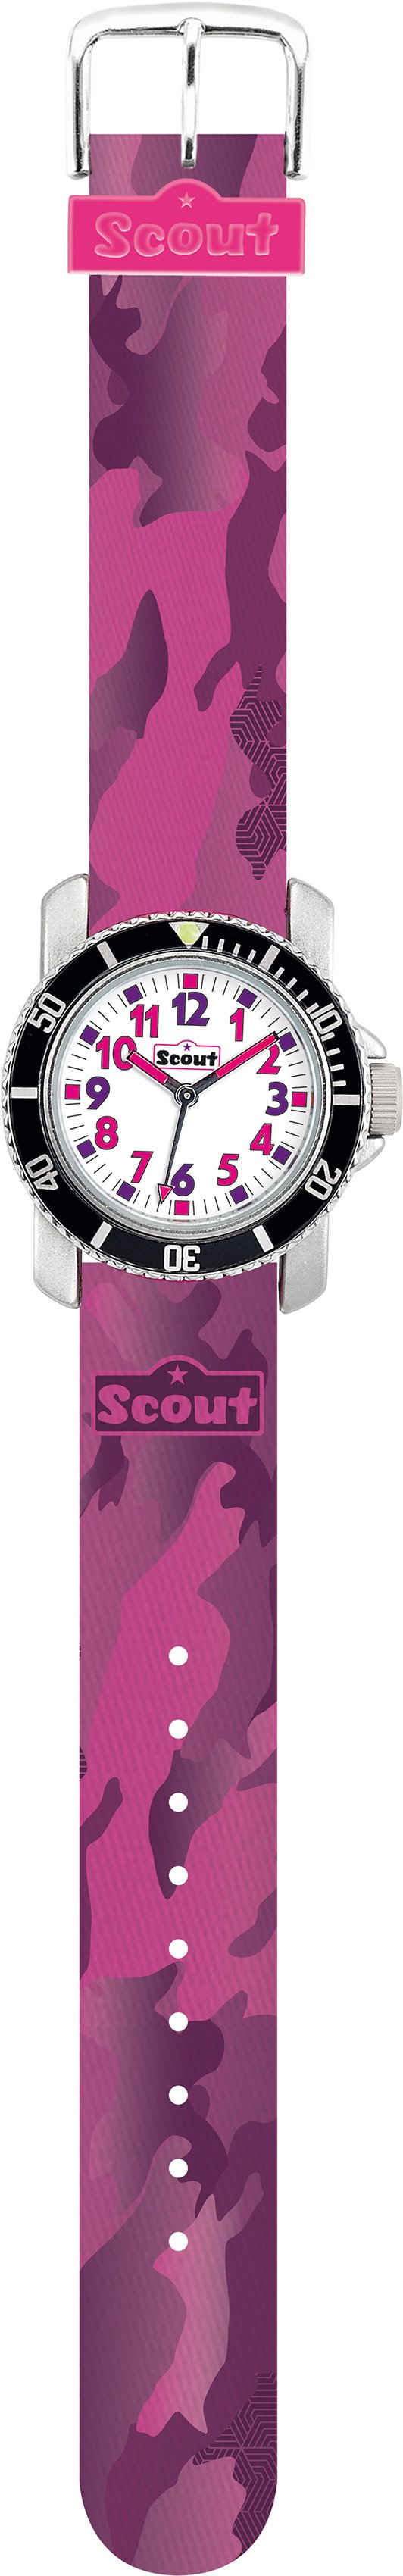 Scout Quarzuhr Diver, 280377004, ideal auch als Geschenk